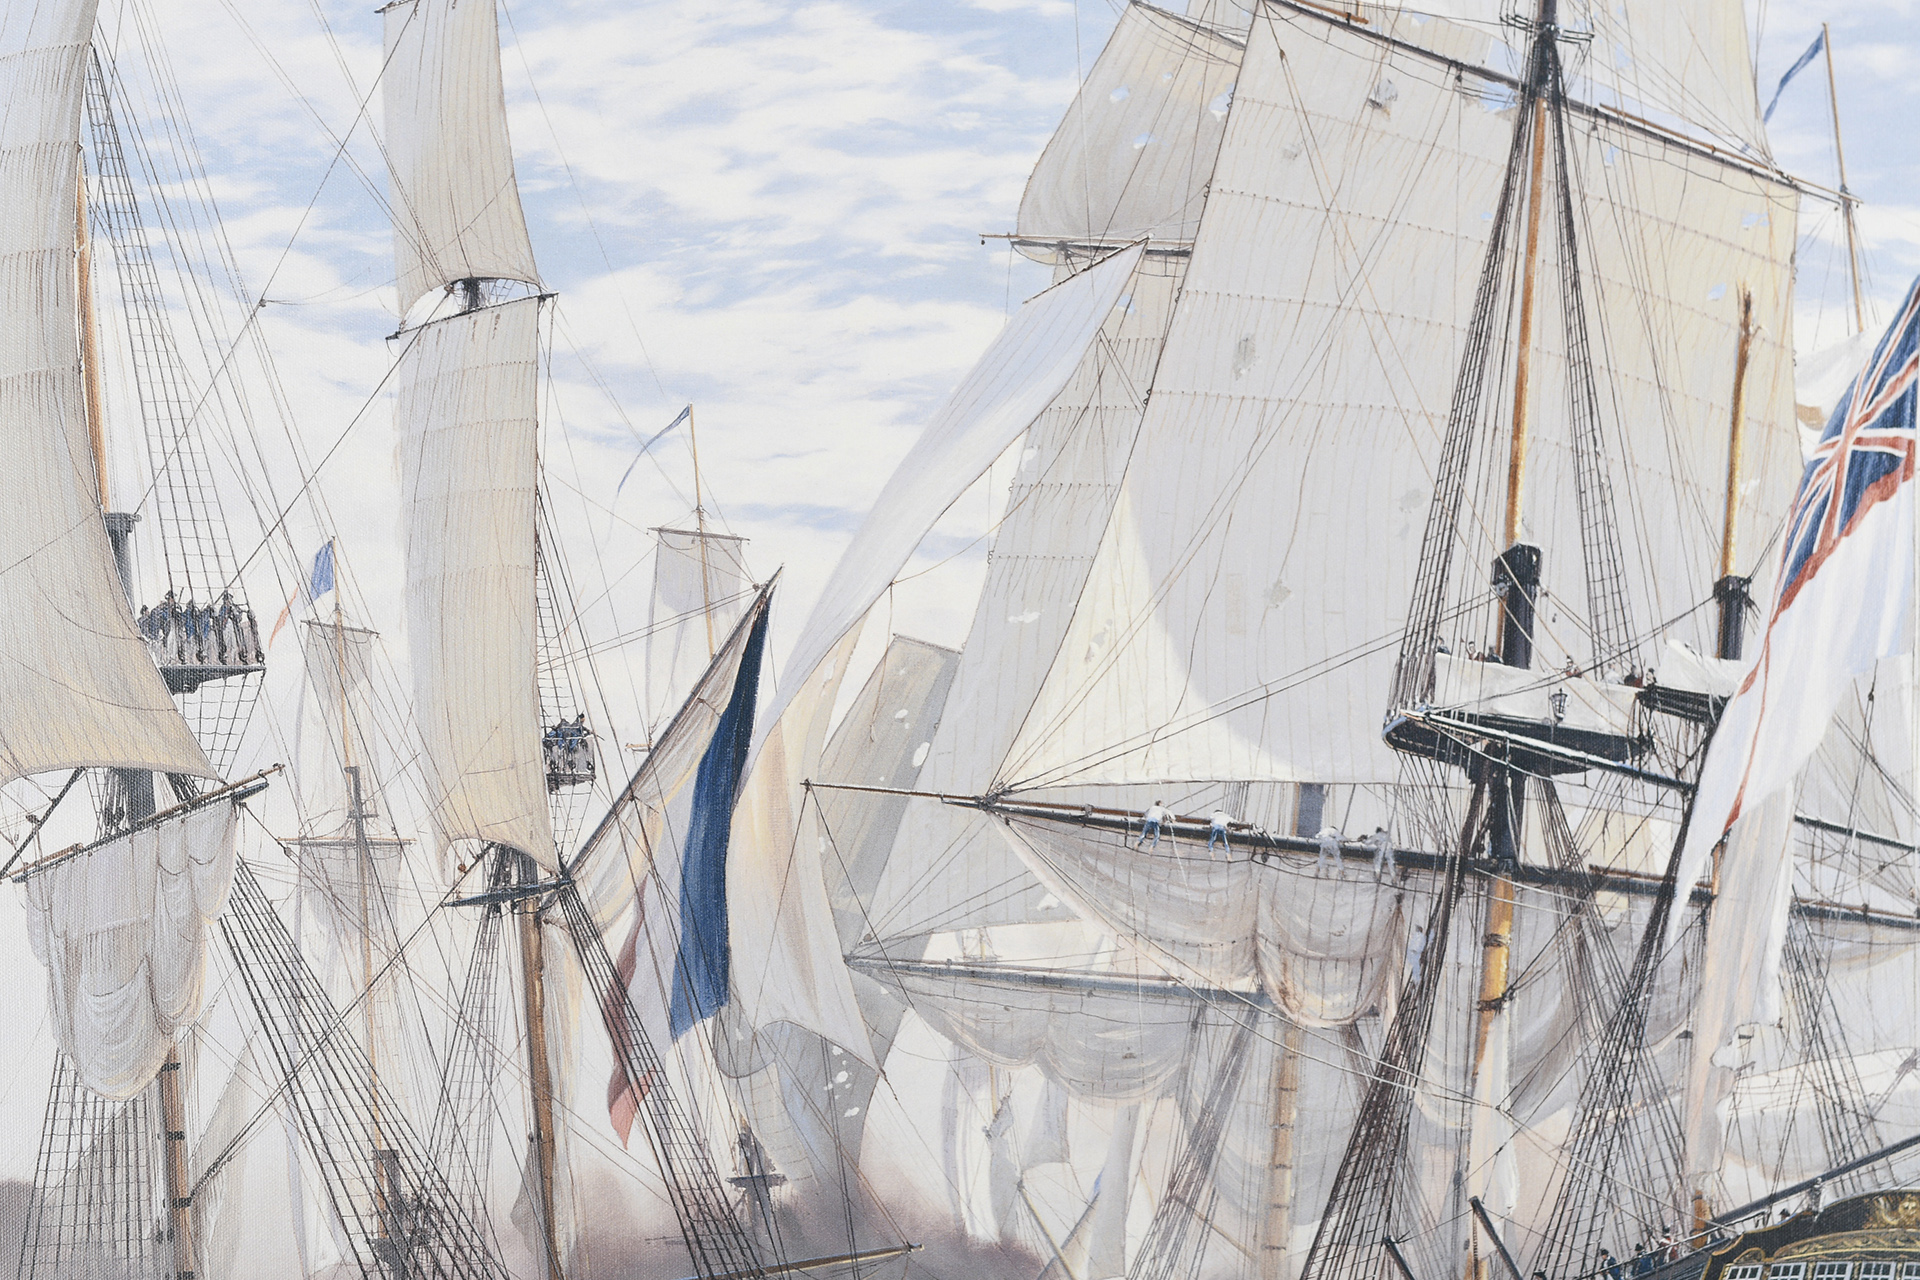 Framed Limited Edition on Canvas by World Renowned Marine Artist Steven Dews "The Battle of Trafalgar"